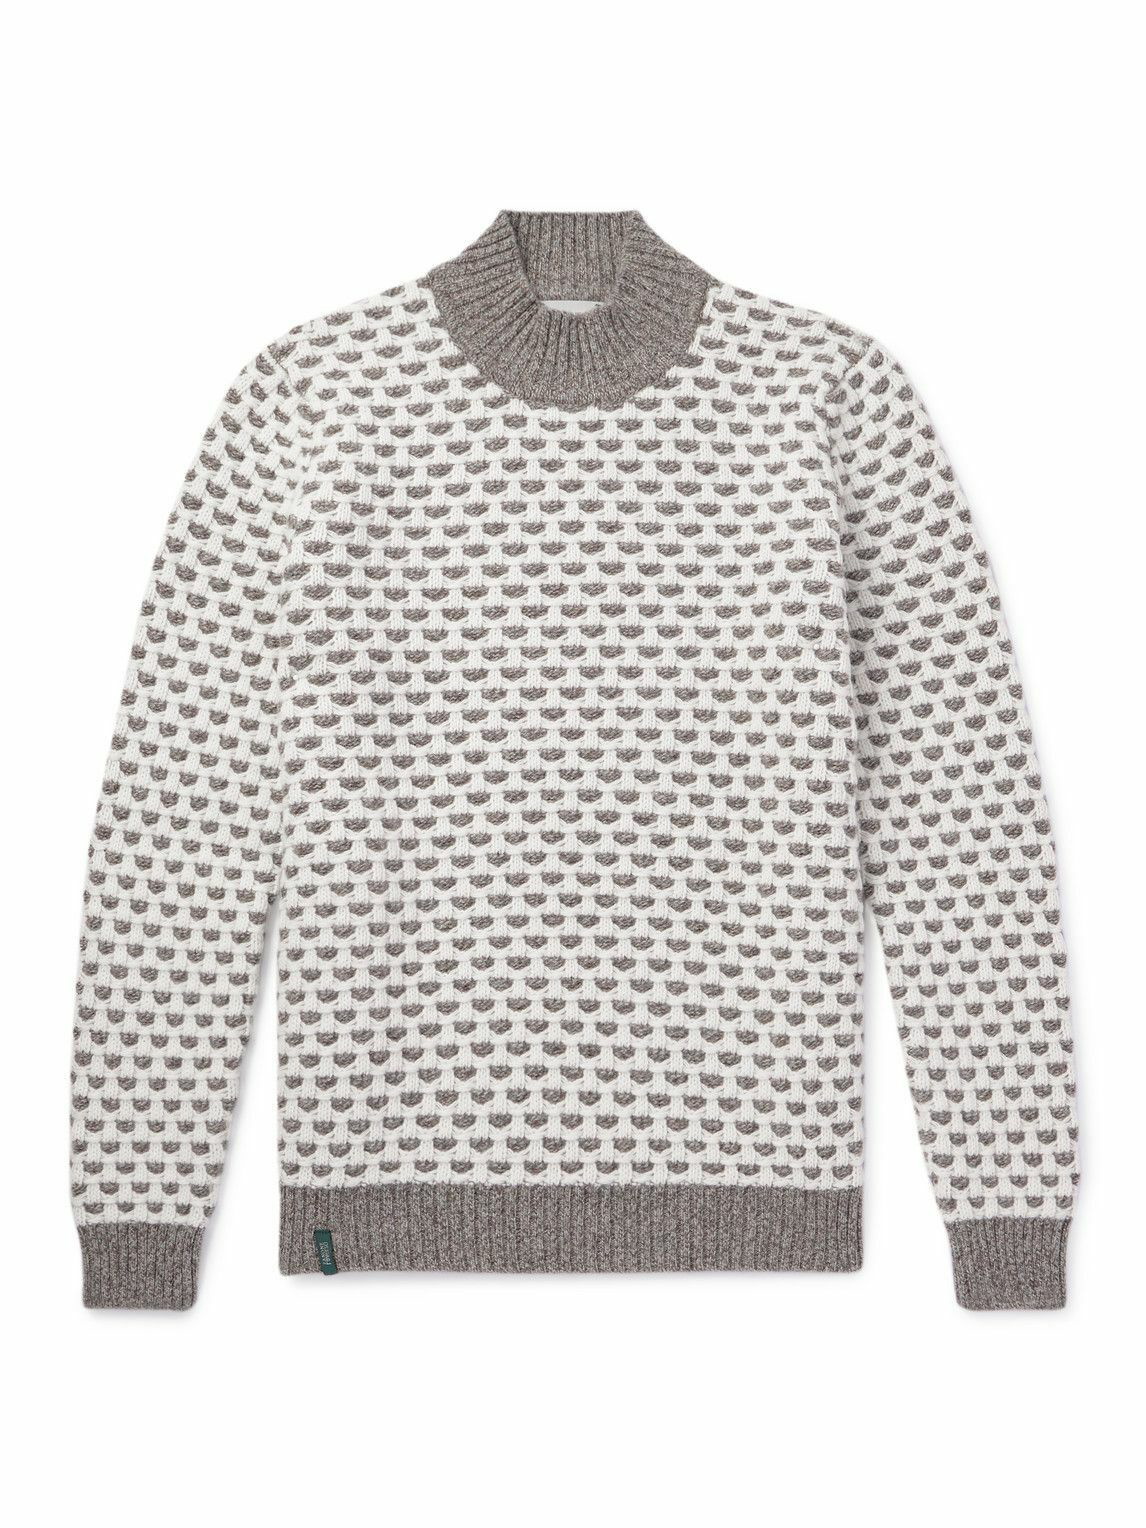 Photo: Incotex - Reversible Knitted Wool Mock-Neck Sweater - Gray